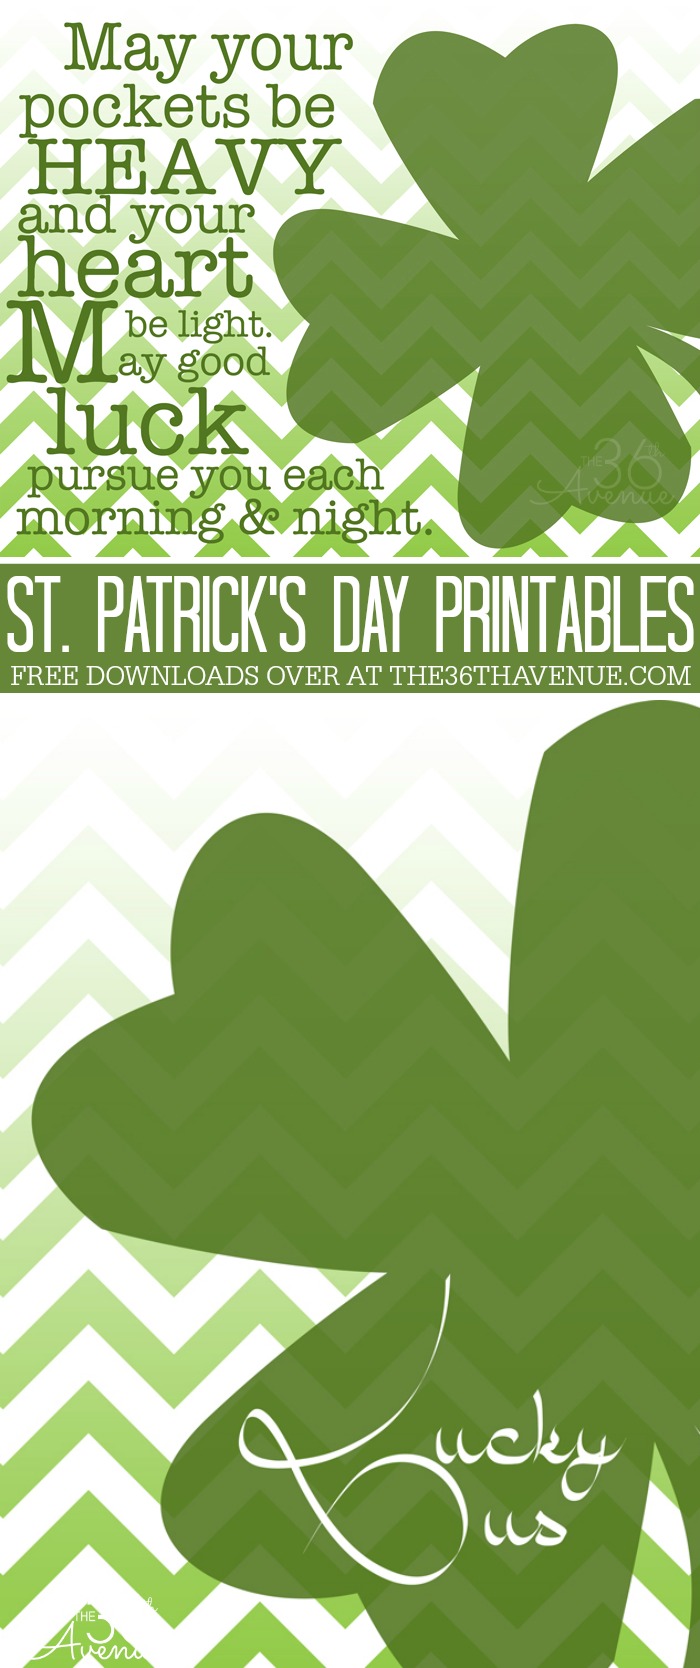 st-patricks-day-free-printables-the-36th-avenue